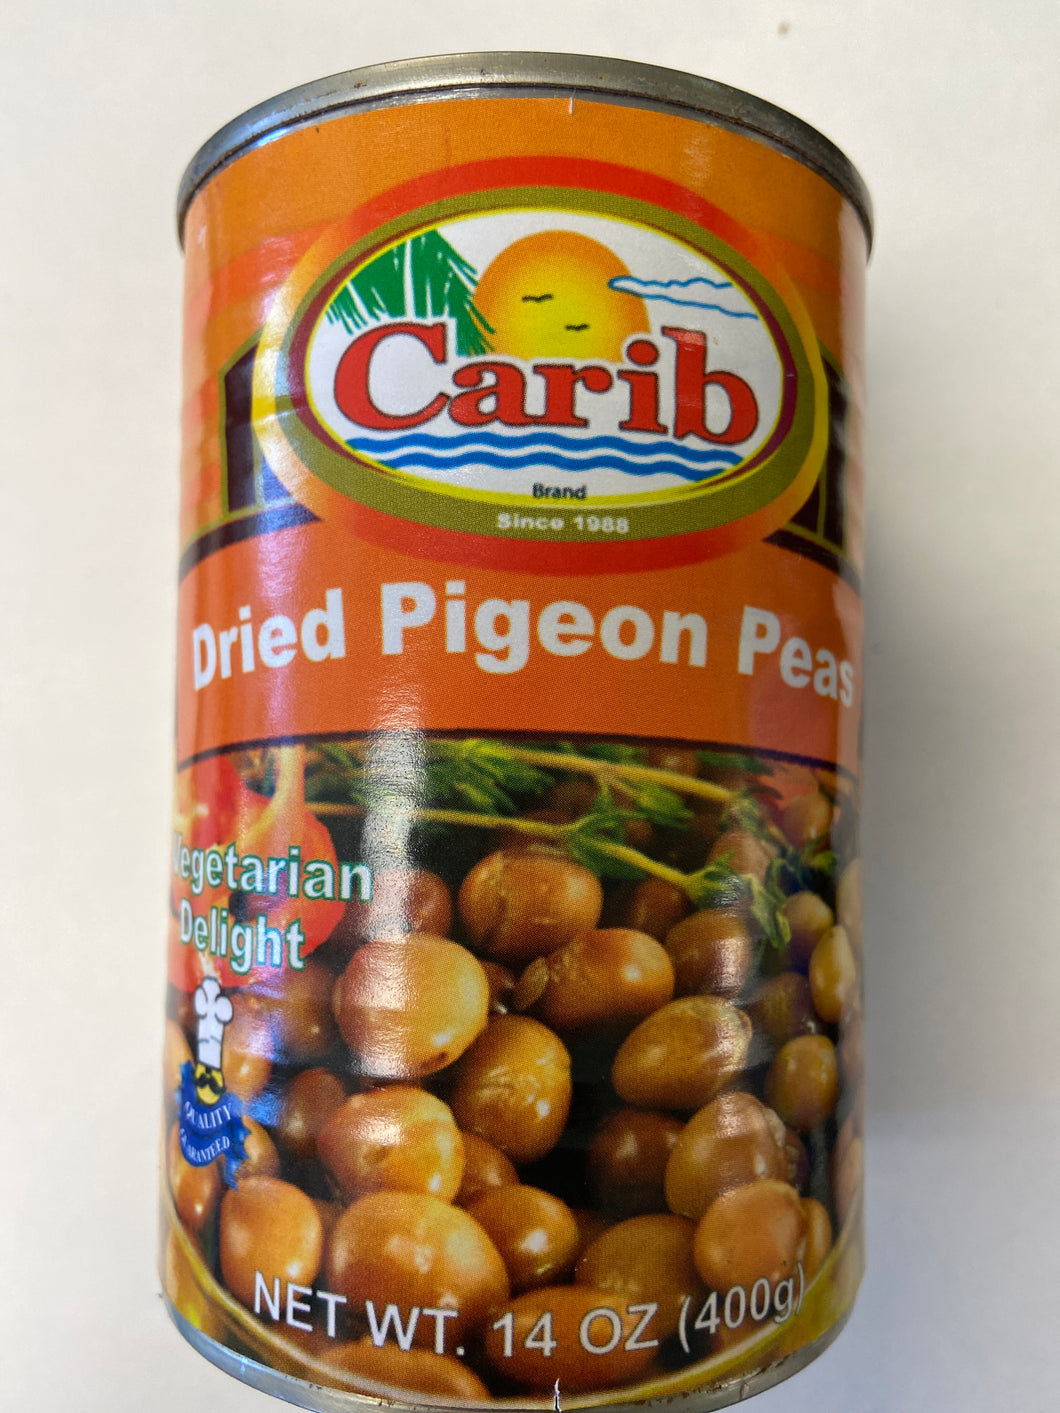 Dried Pigeon Peas, Carib